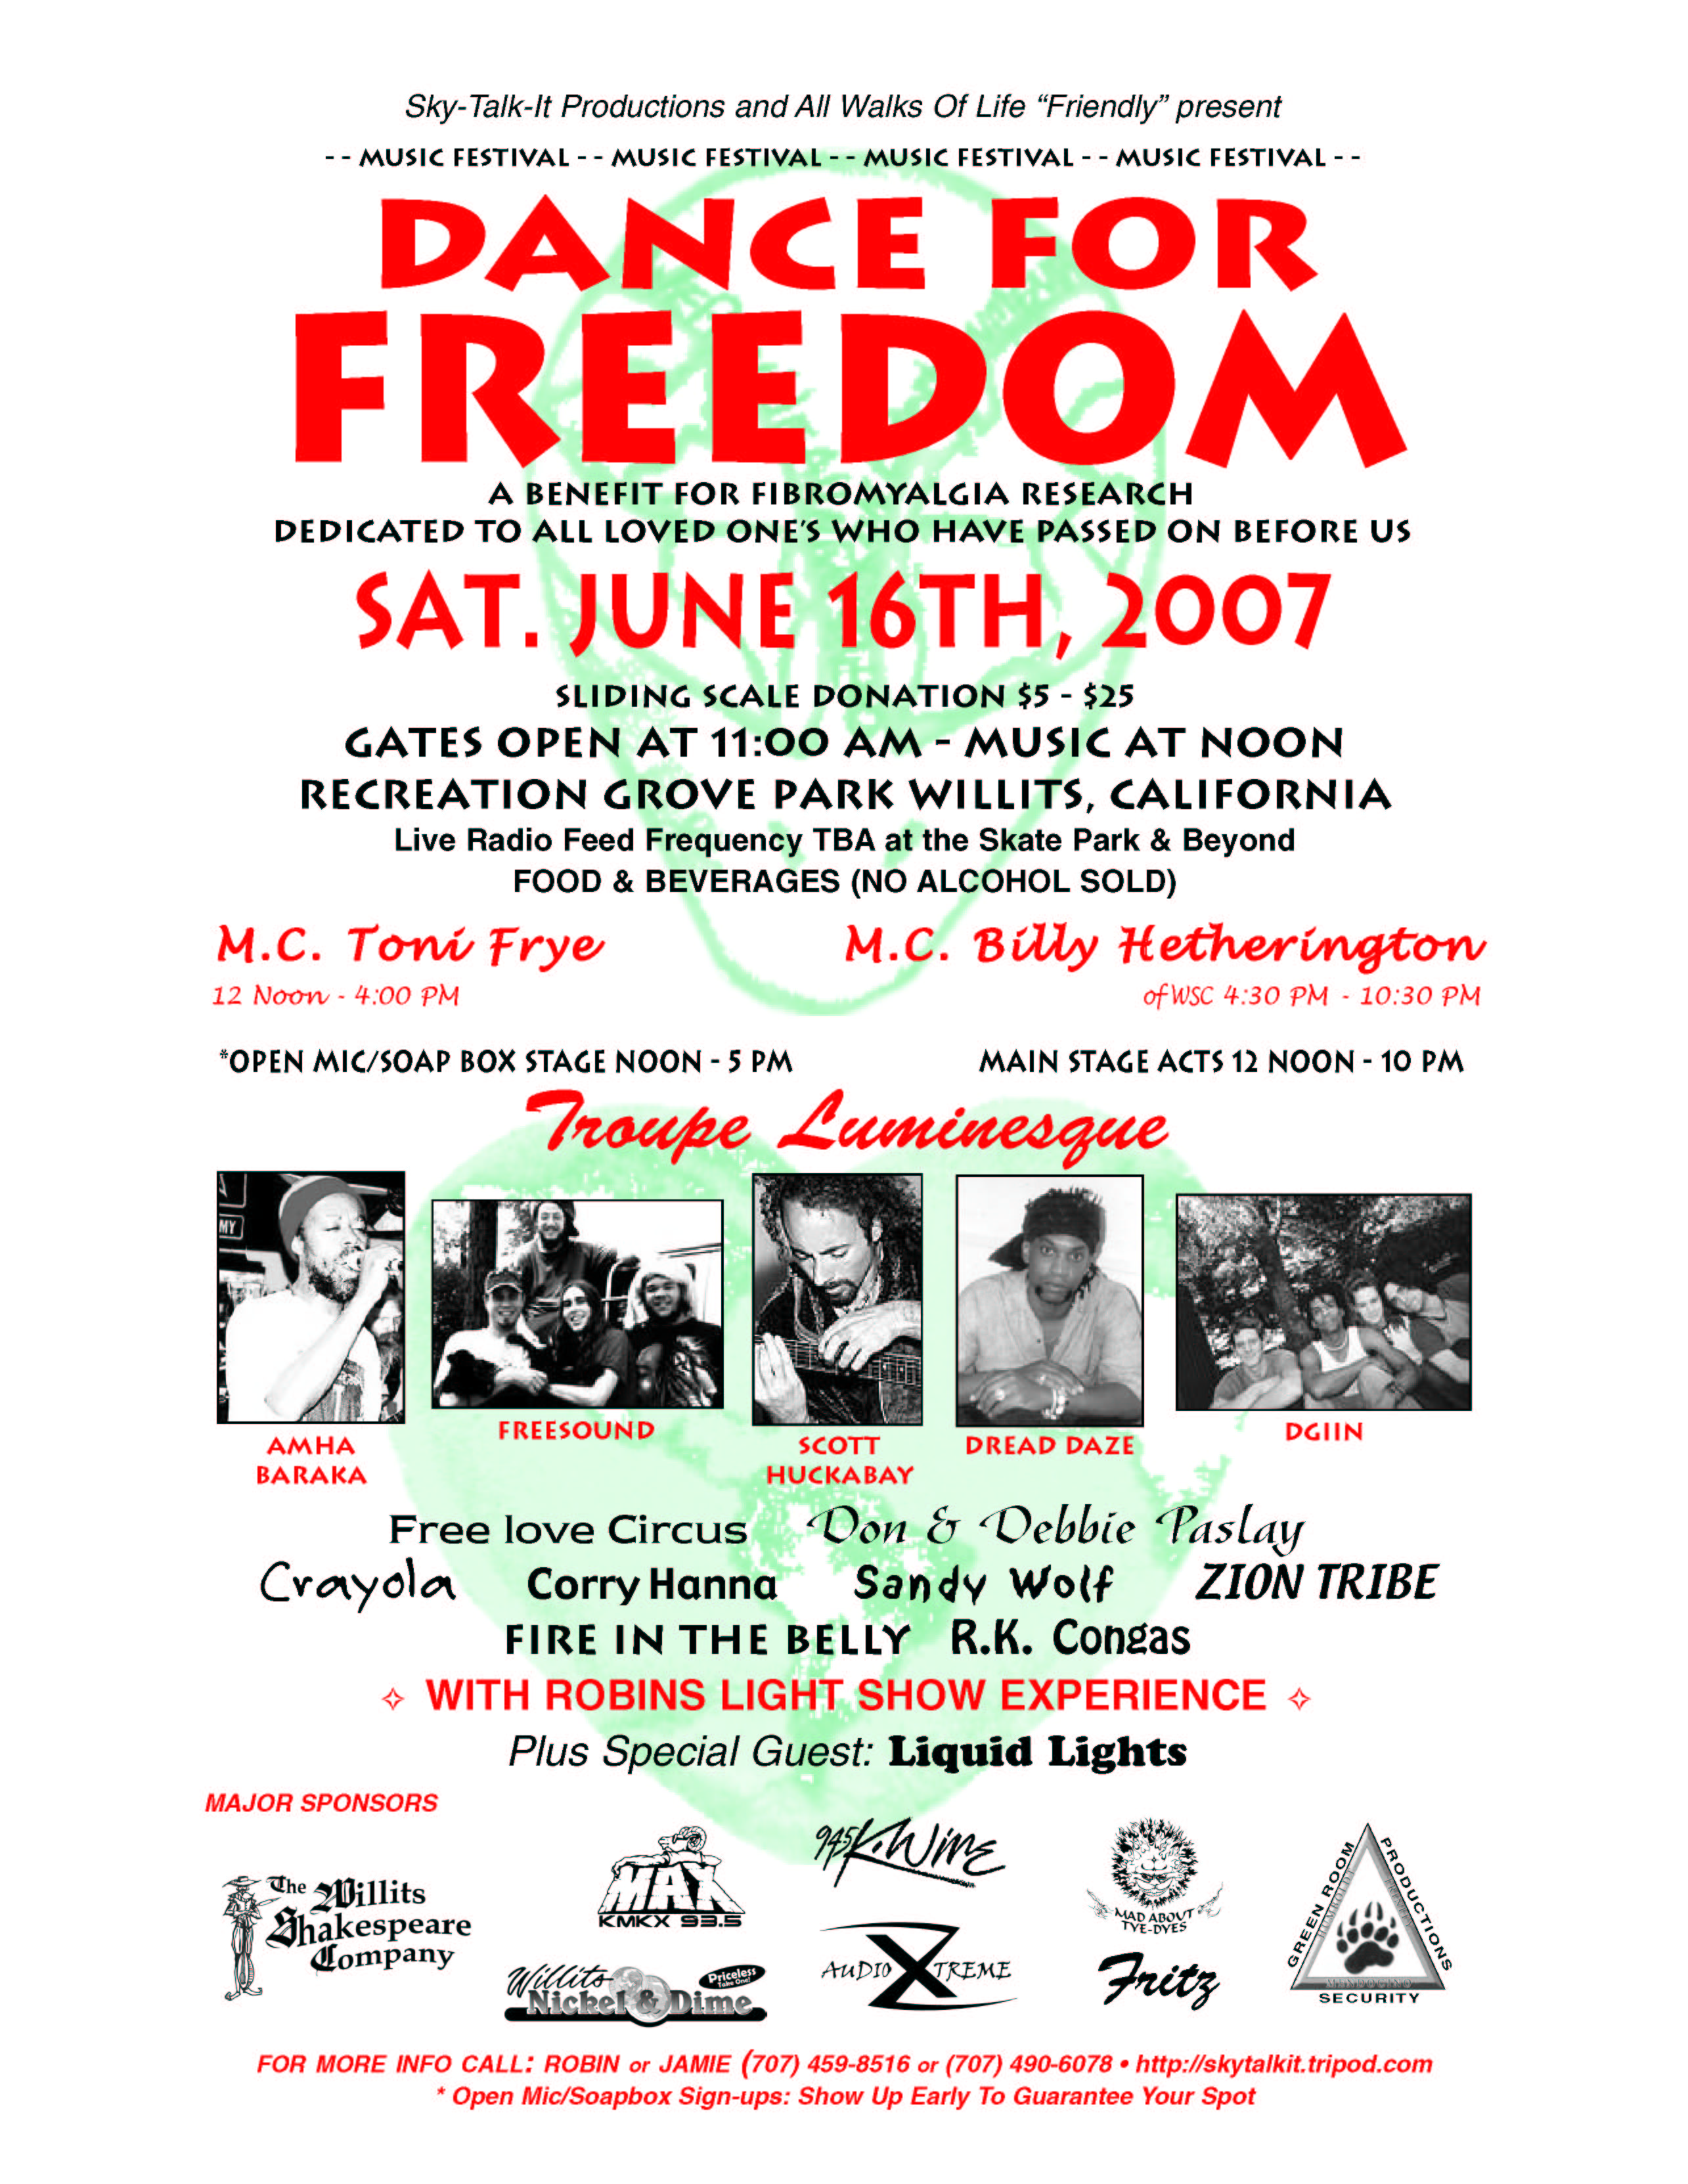 Dance For Freedom Musical Festival 2007 LINE UP